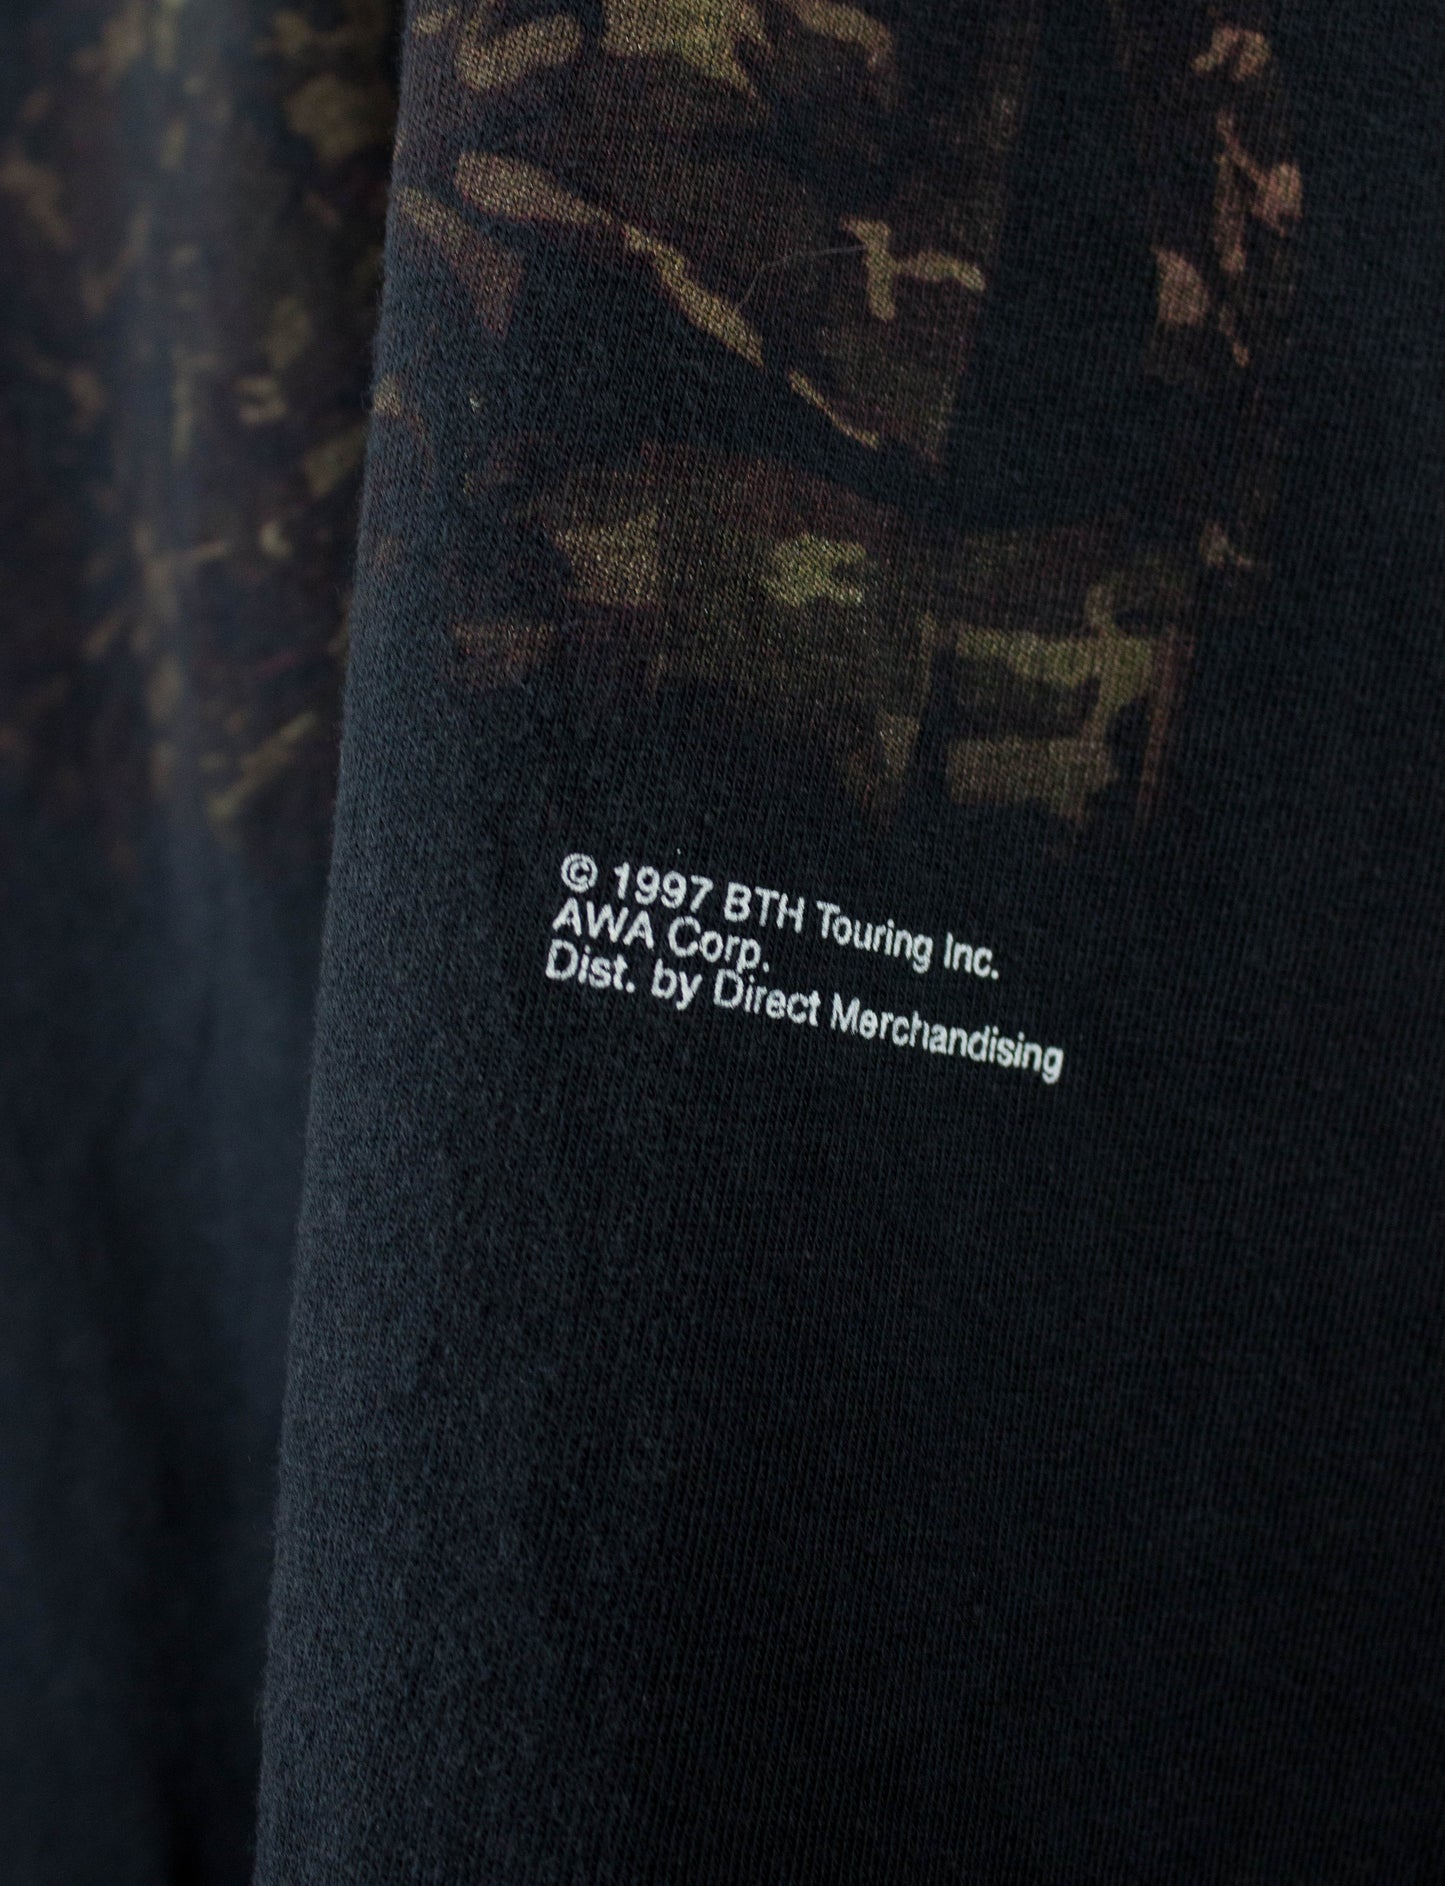 Bone Thugs N Harmony 1997 Art Of War Rap Tee Concert T Shirt XL